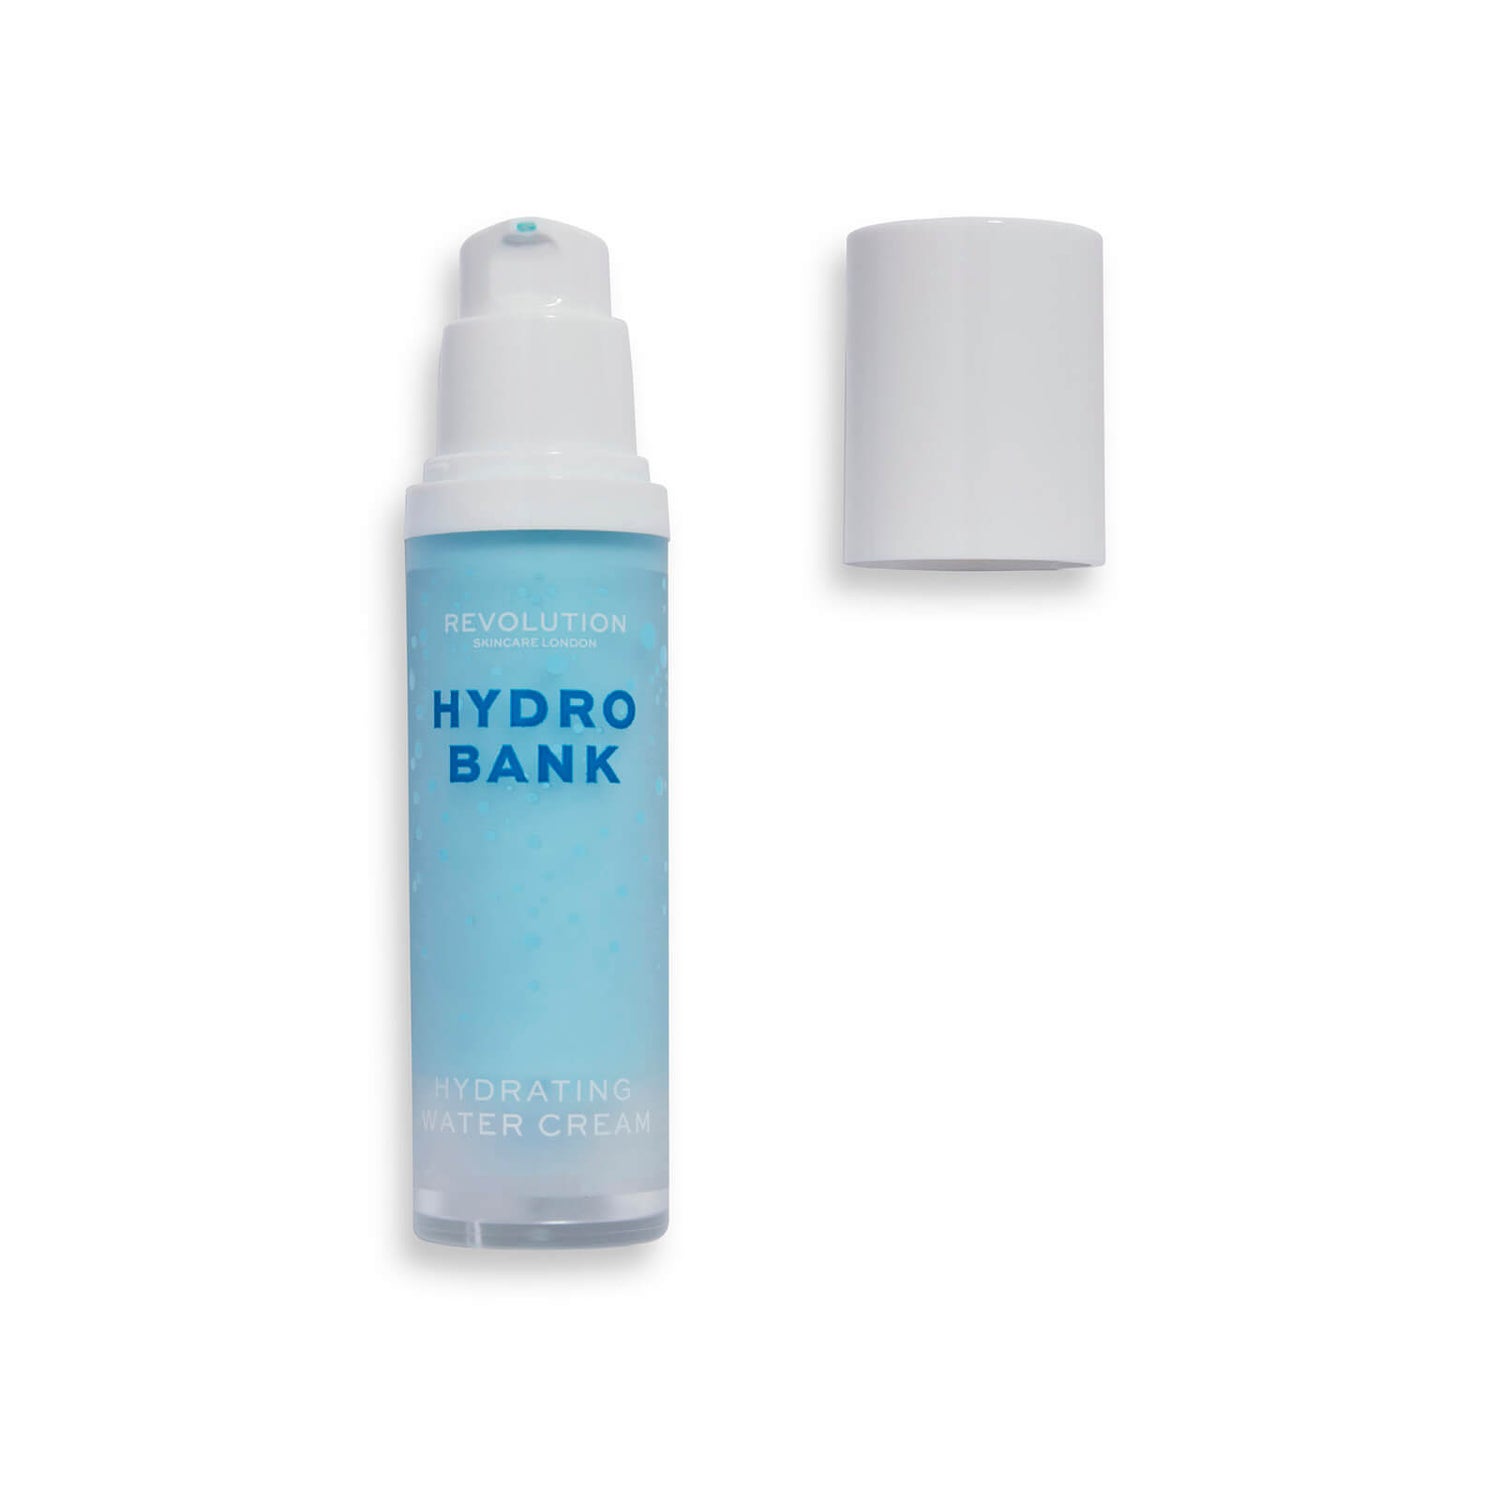 Hydro Bank Hydrating Water Cream